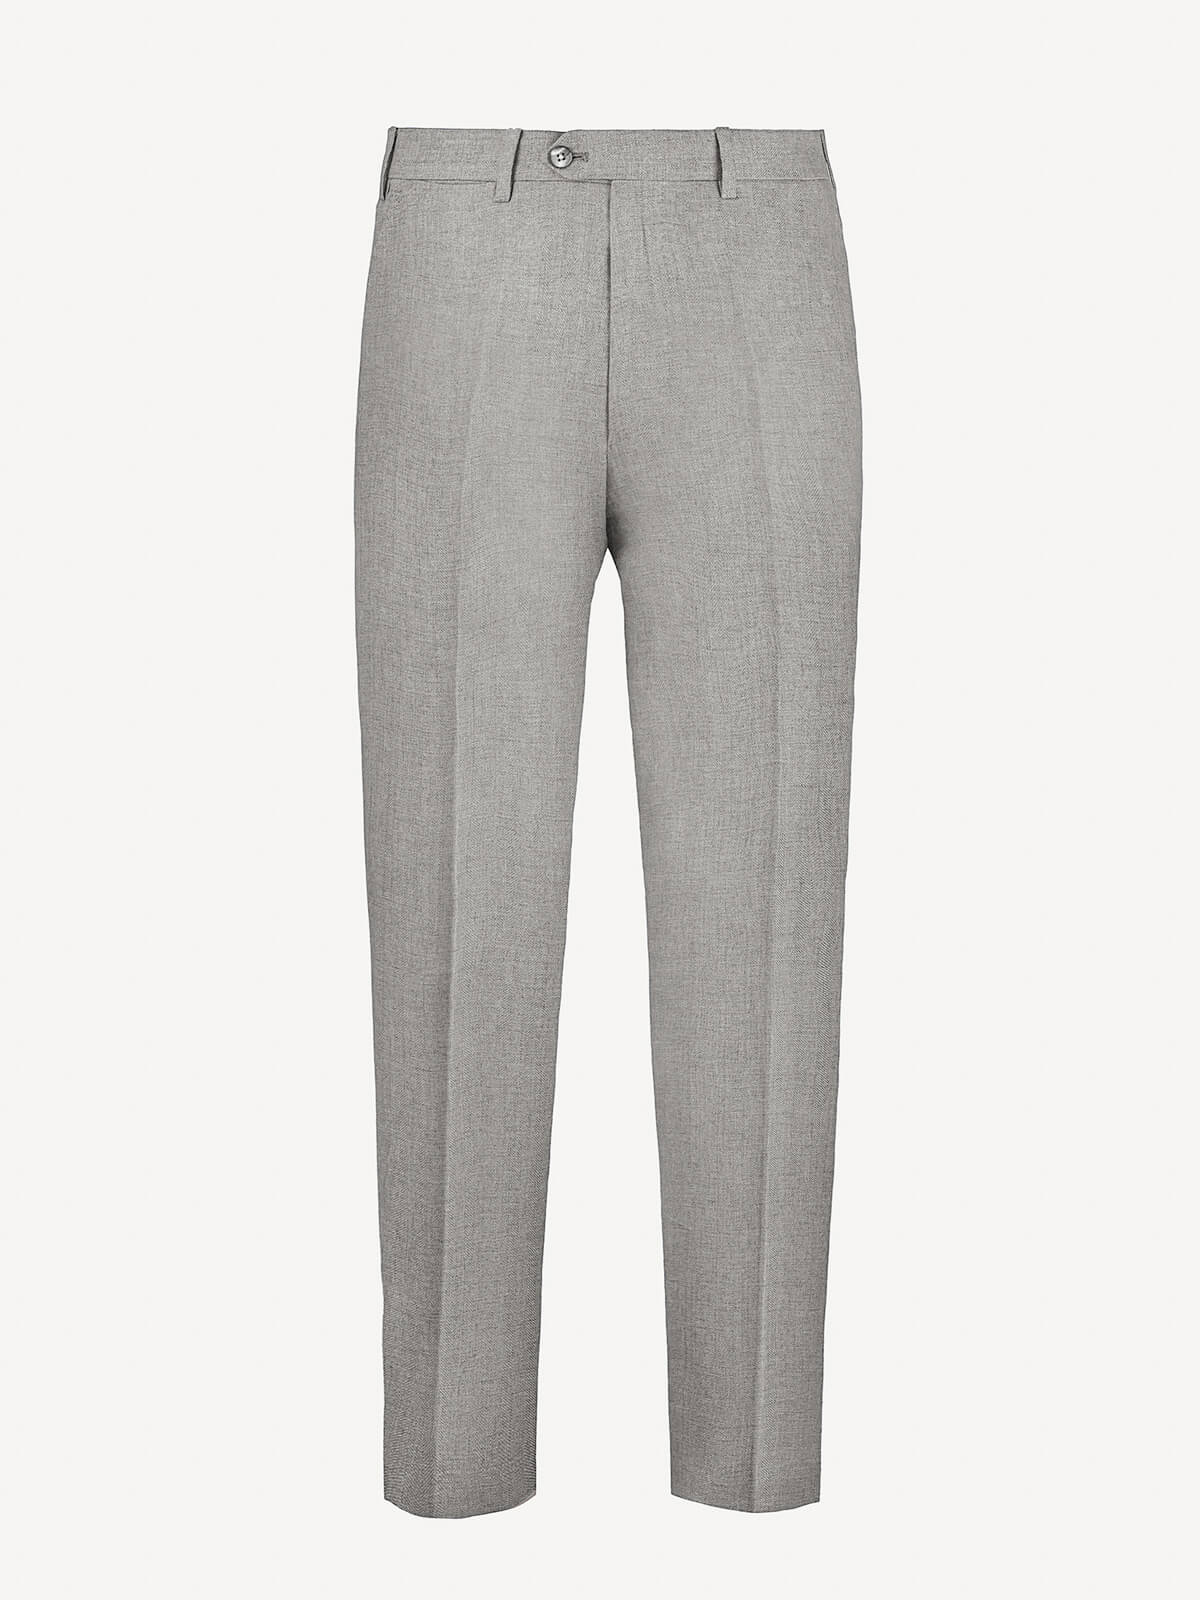 Pantalone Brezza Light Grey 100%Capri